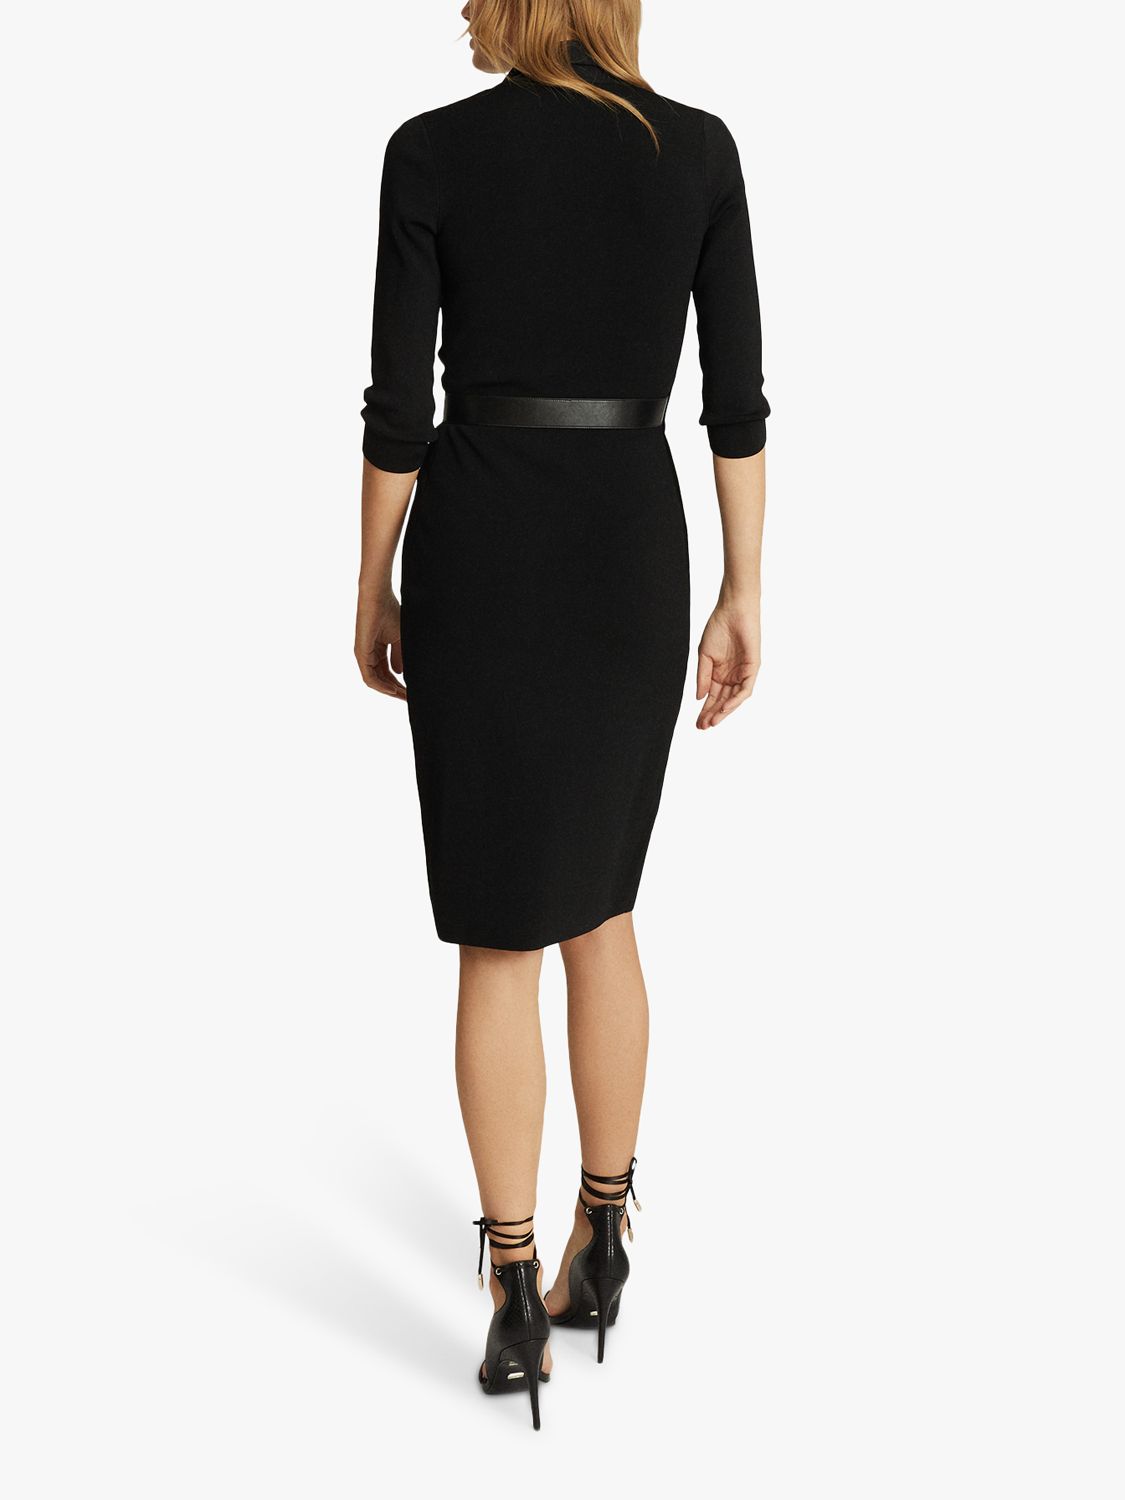 Reiss Luisa Knee Length Dress, Black